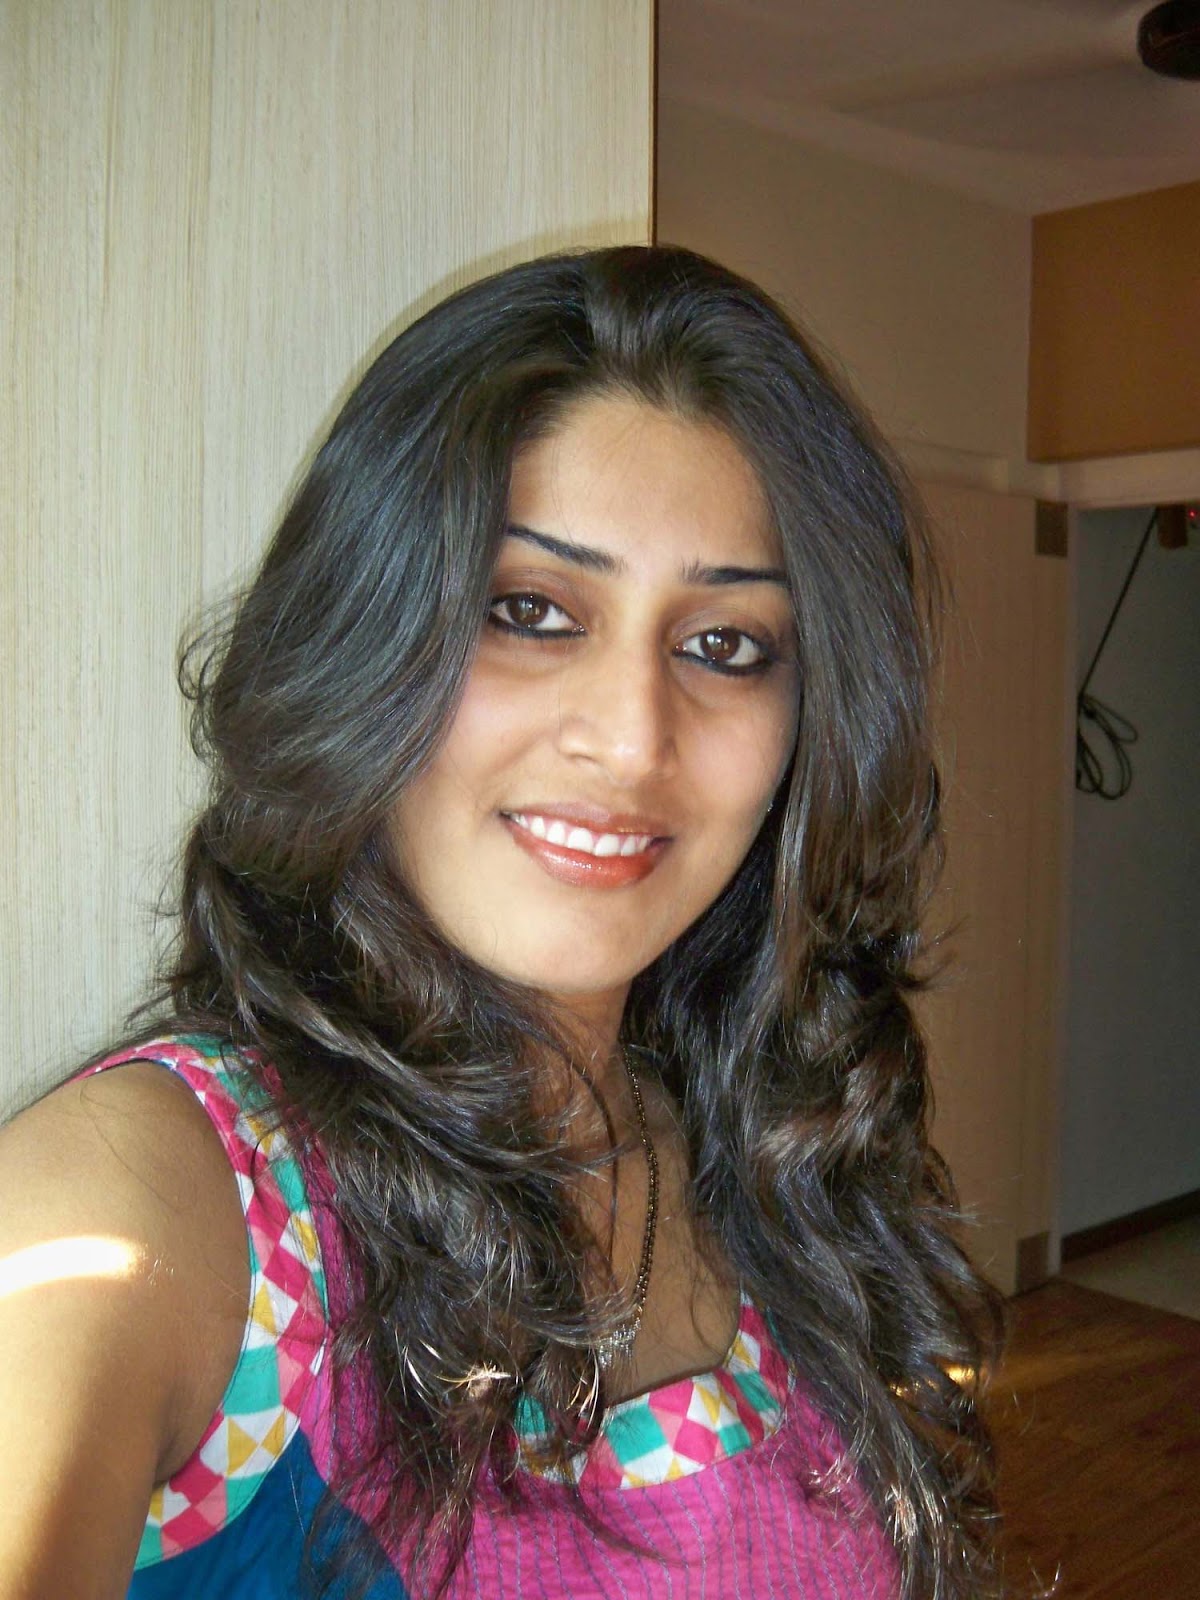 Indian Girls And Lesbians Photos Hd Latest Tamil Actress Telugu Actress Movies Actor Images